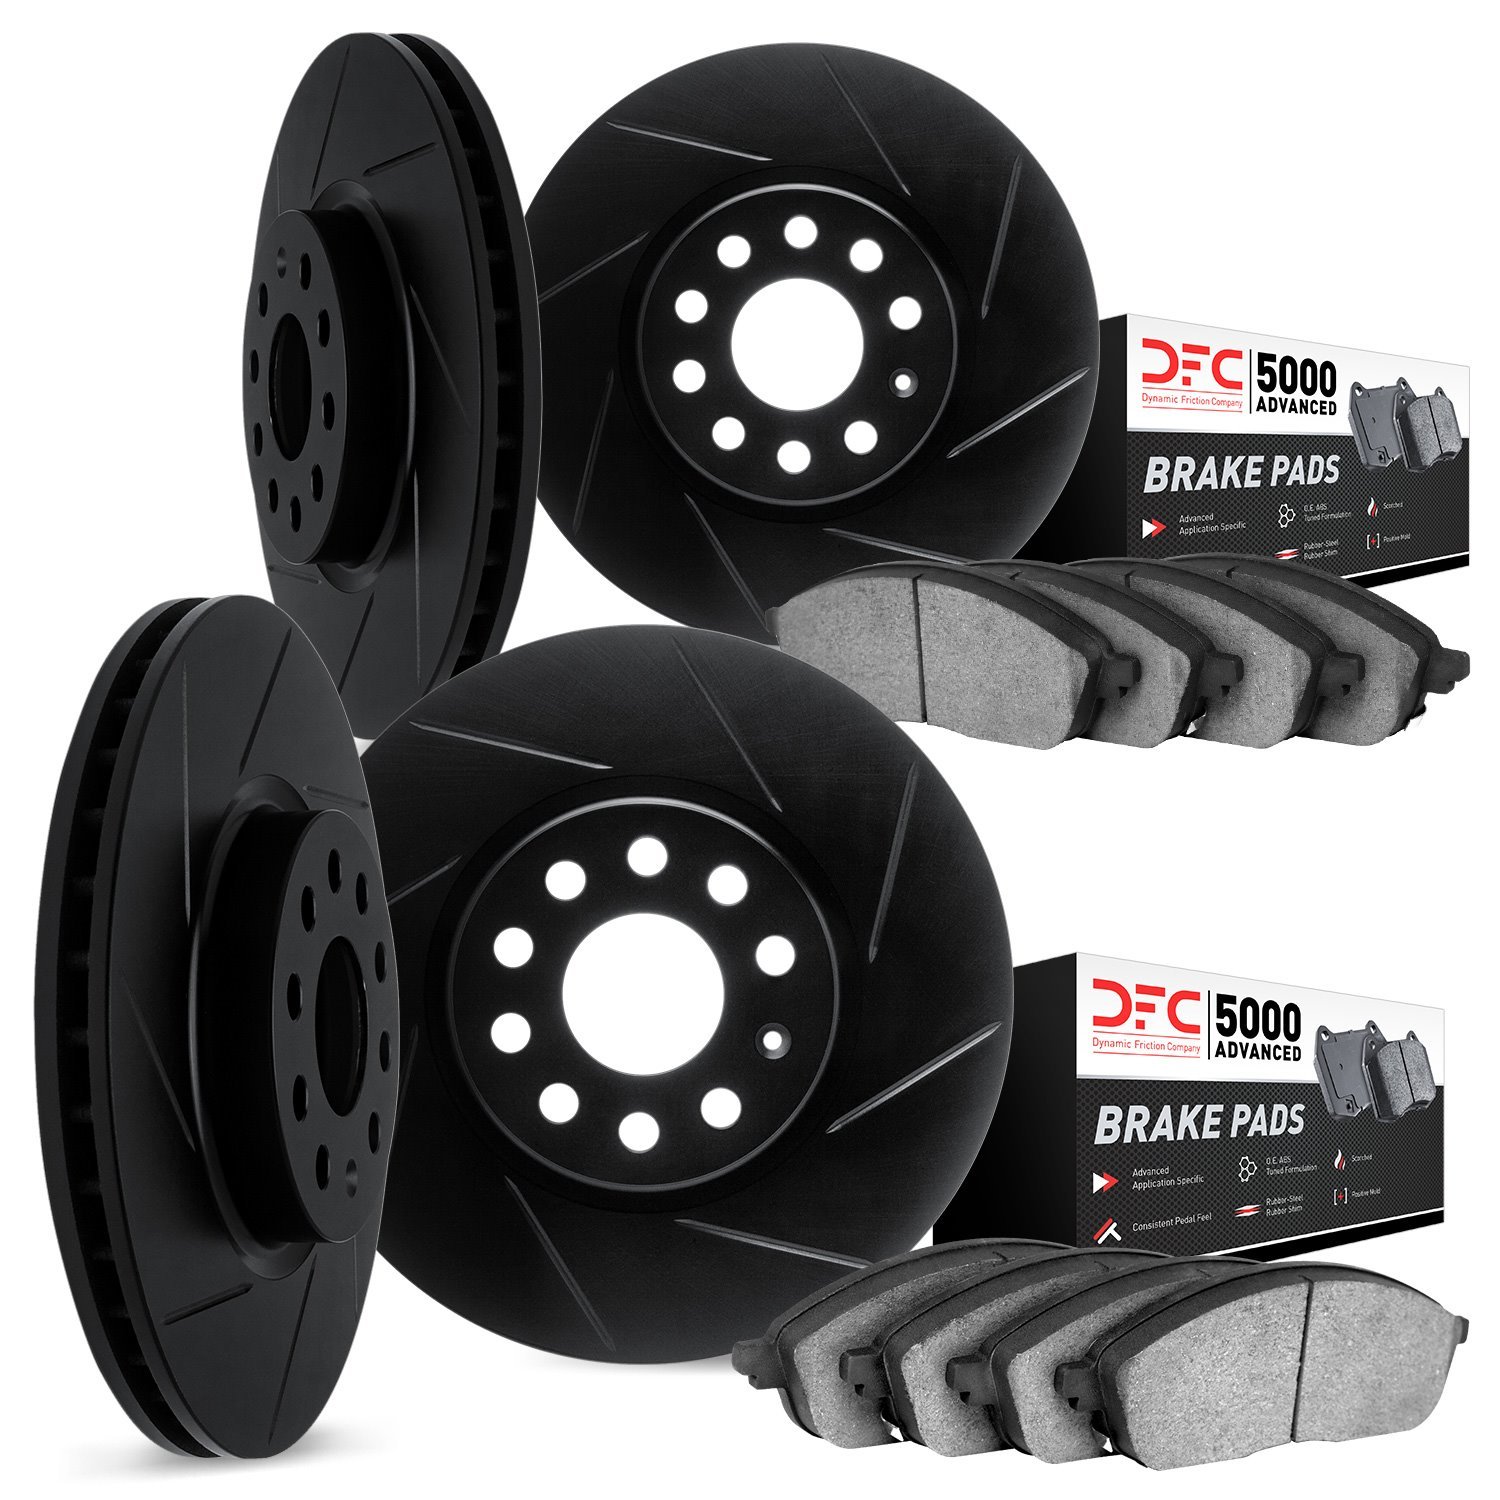 3514-67064 Slotted Brake Rotors w/5000 Advanced Brake Pads Kit & Hardware [Black], 2008-2013 Infiniti/Nissan, Position: Front an